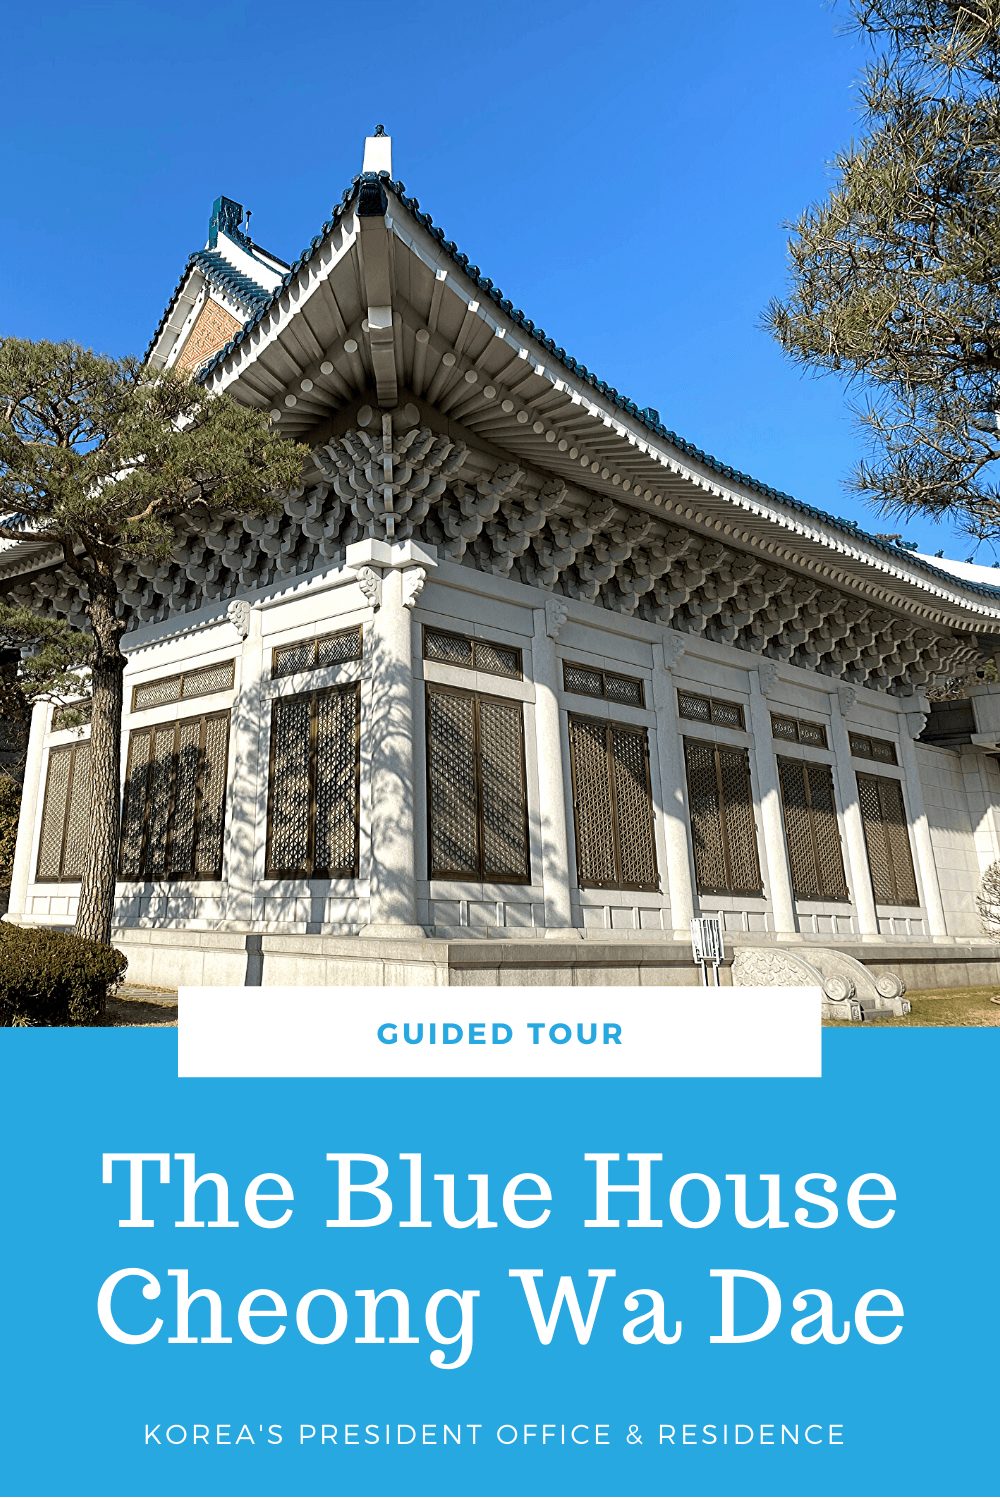 The Blue House Cheong Wa Dae